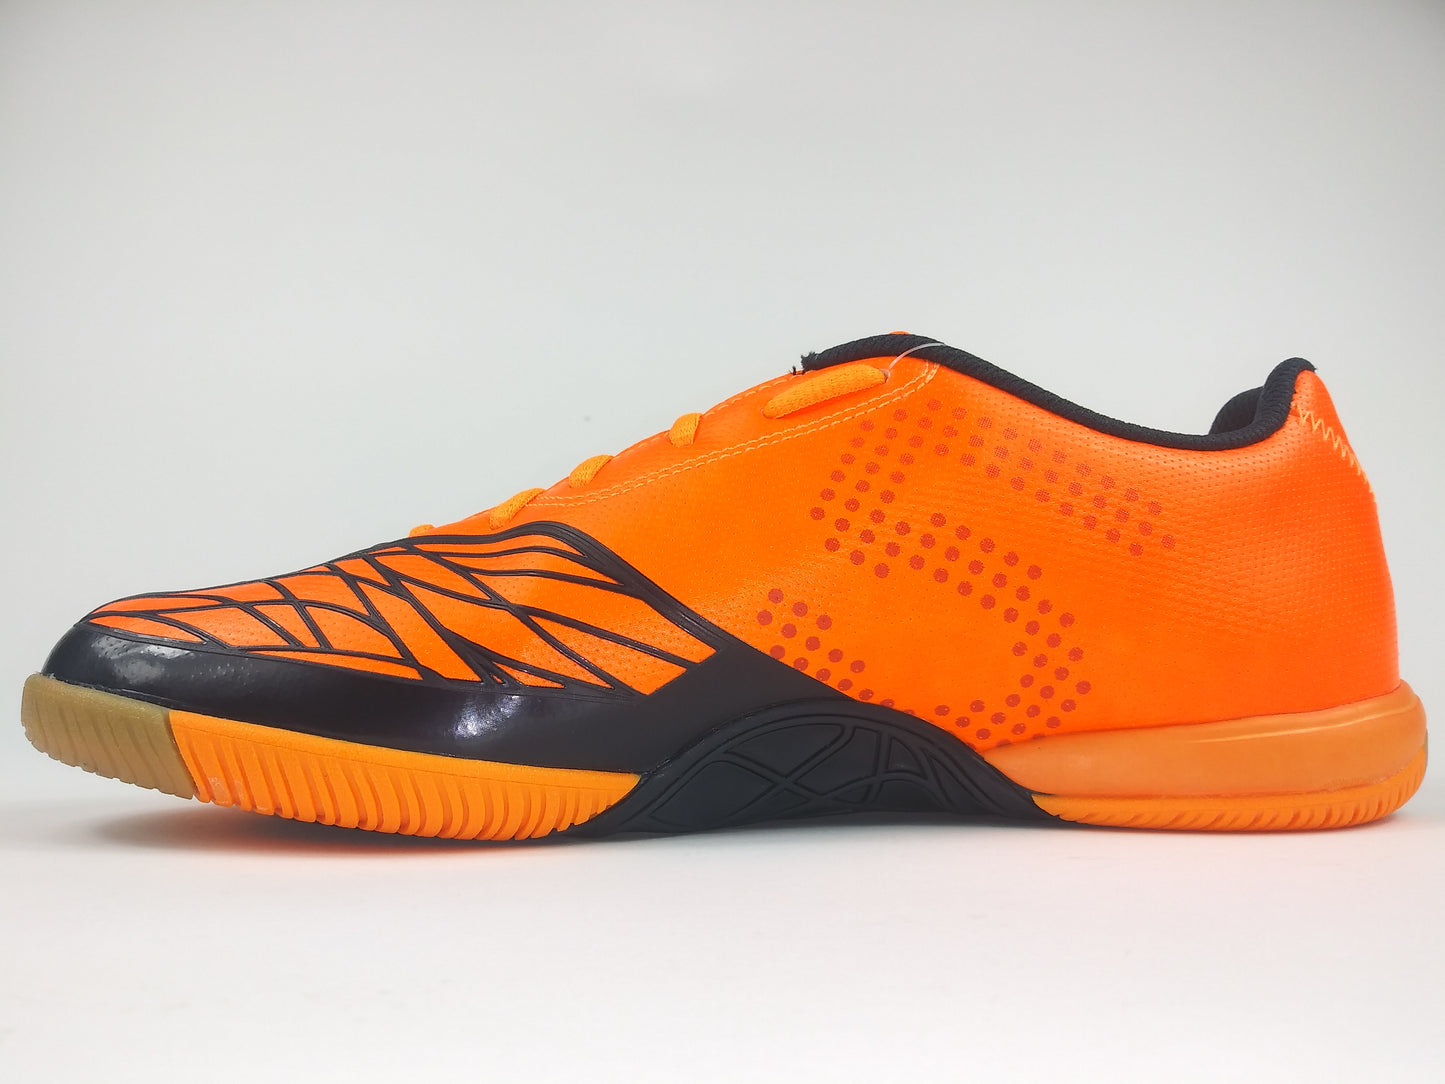 Adidas Freefootball SpeedTrick Indoor Shoes Orange Black